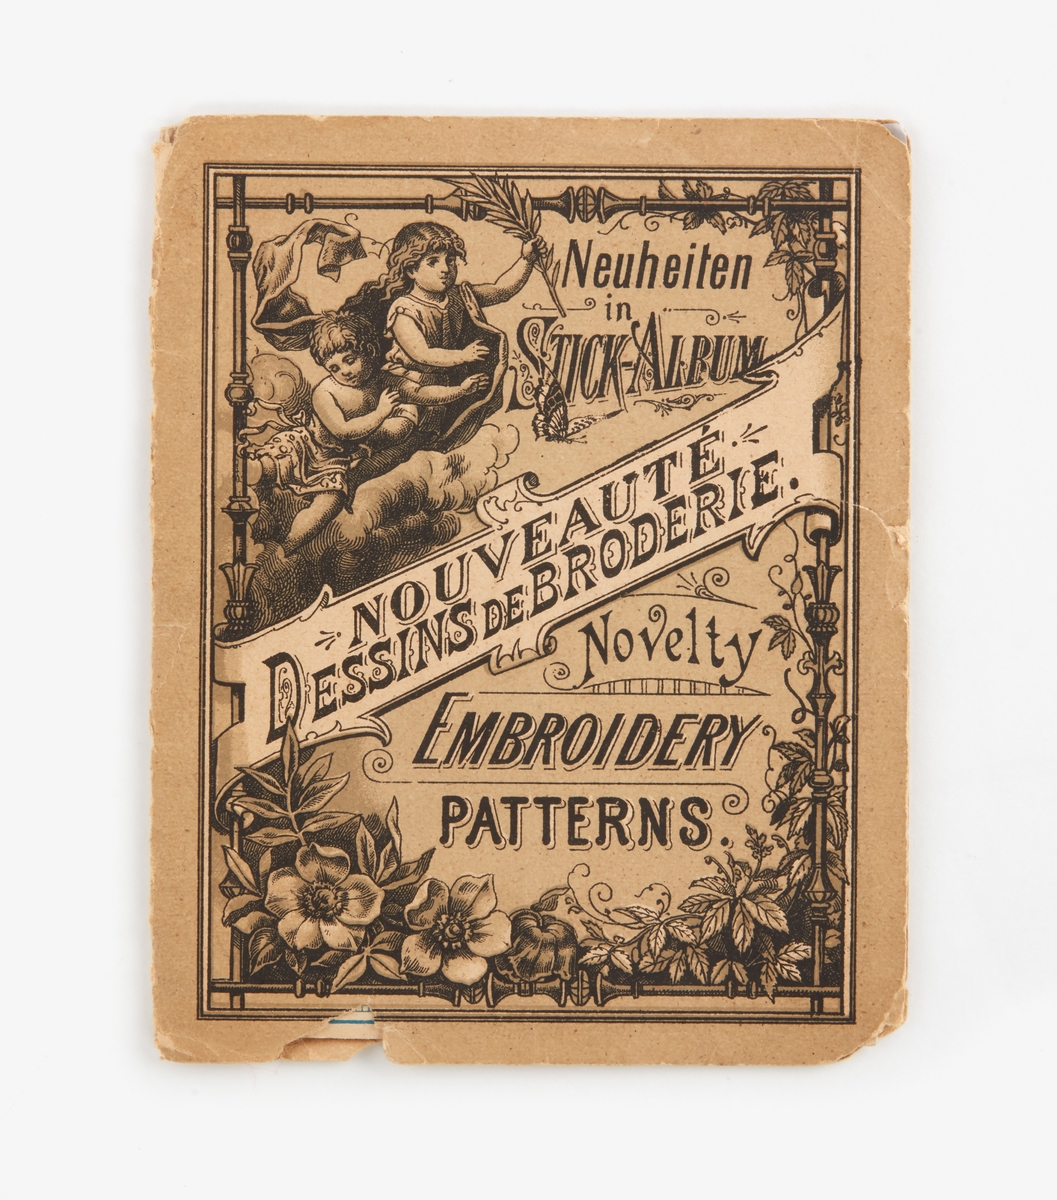 Mönsterbok "Neuheiten in Stick-Album, Nouveauté Dessins de broderie, Novelty Embroidery Patterns".